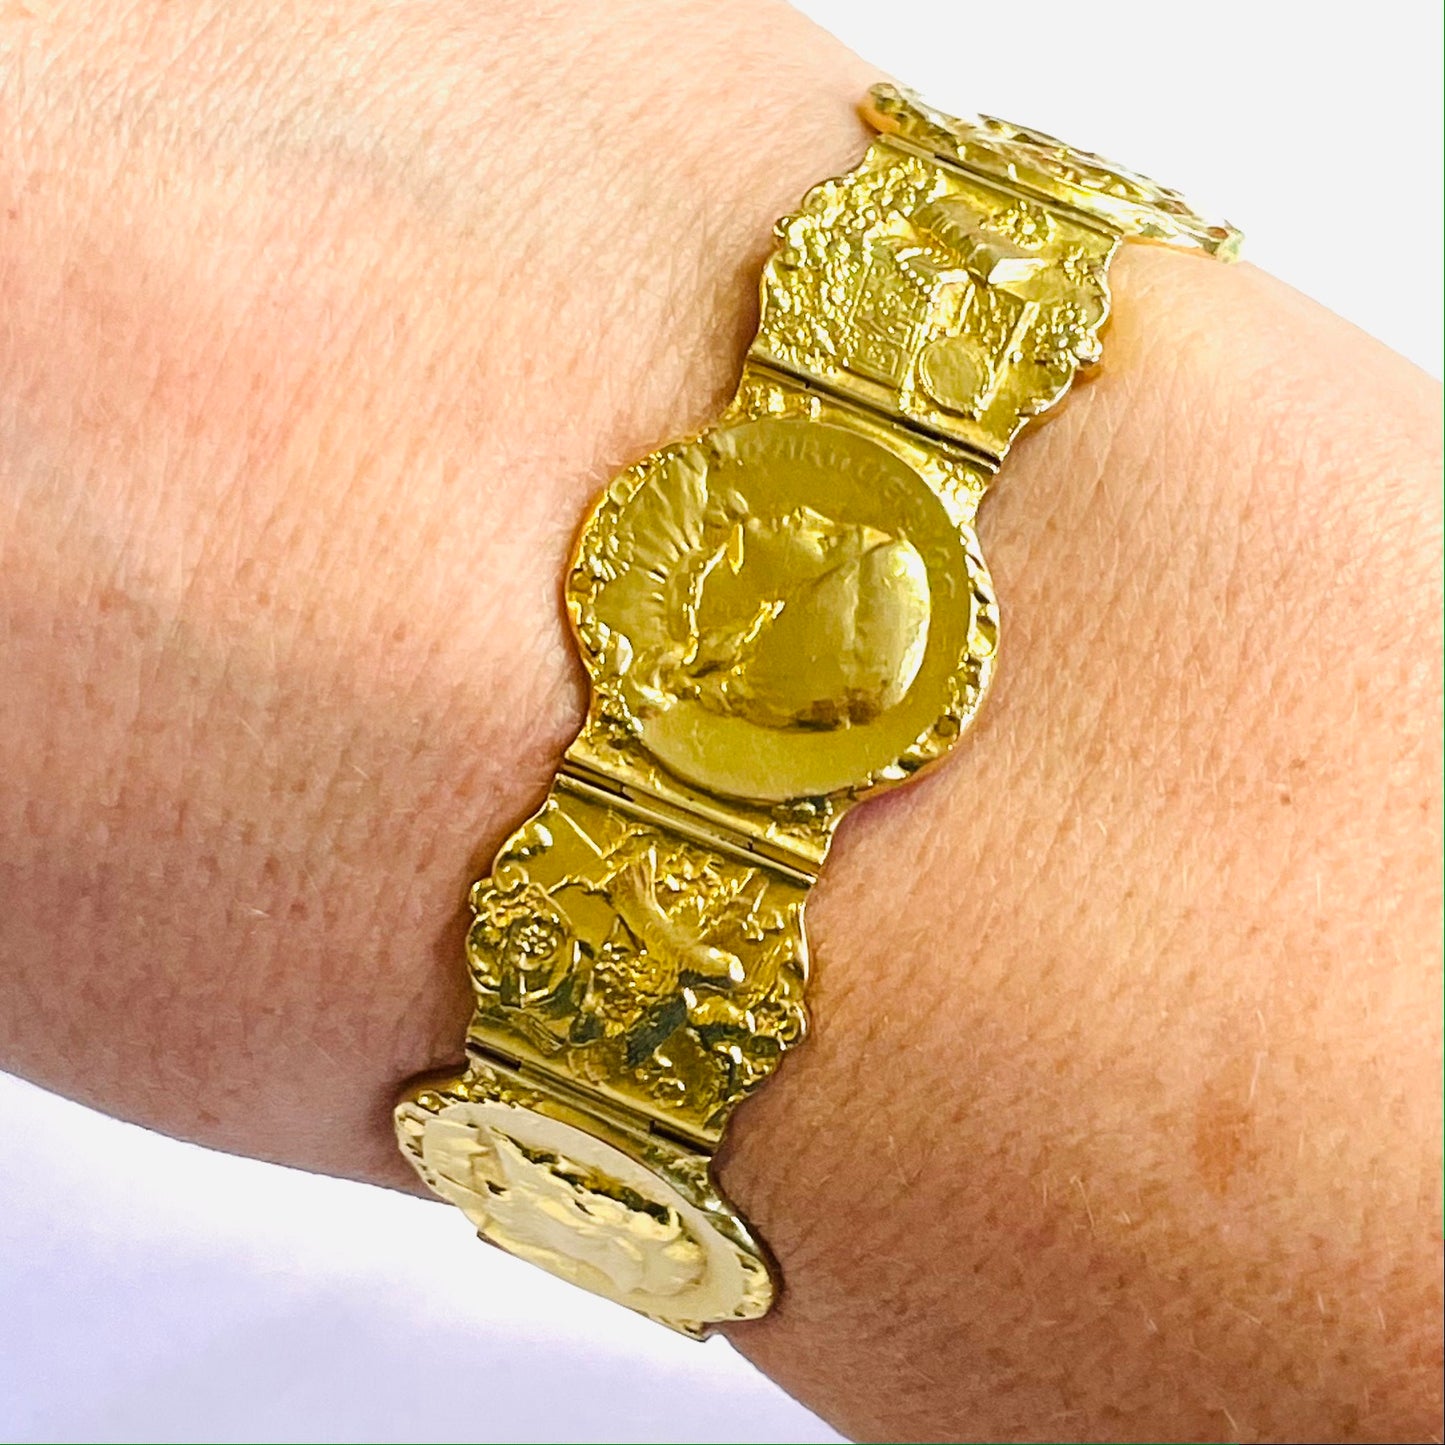 Antique 18KT Yellow Gold "Goethe's Faust" Bracelet on wrist